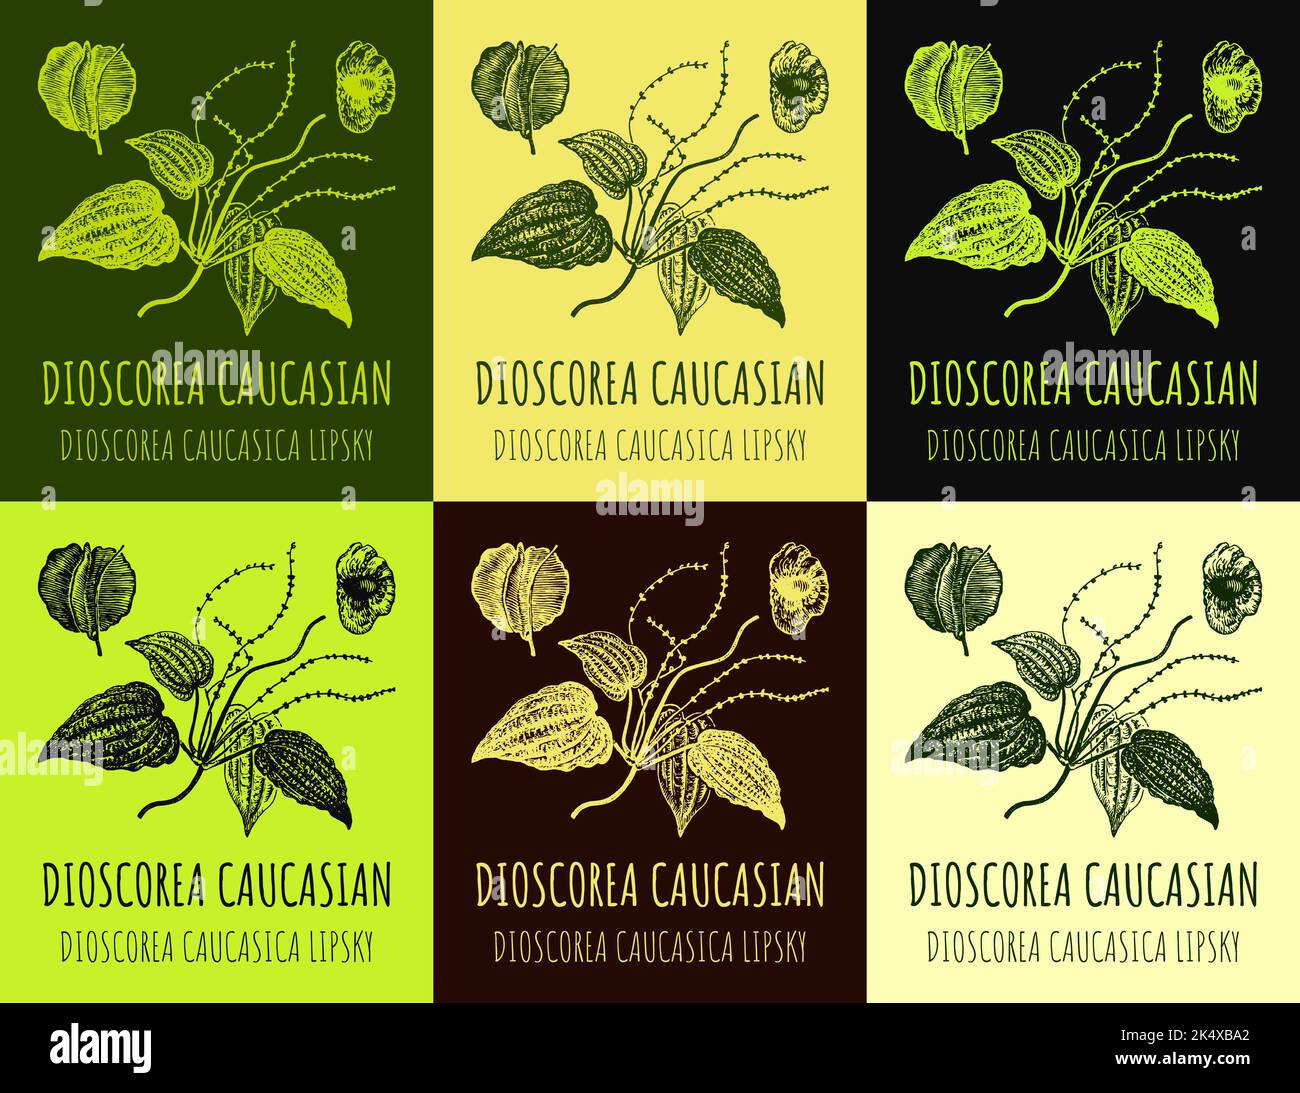 Set of vector drawings of DIOSCOREA CAUCASIAN in different colors. Hand drawn illustration. Latin name DIOSCOREA CAUCASICA LIPSKY. Stock Photo